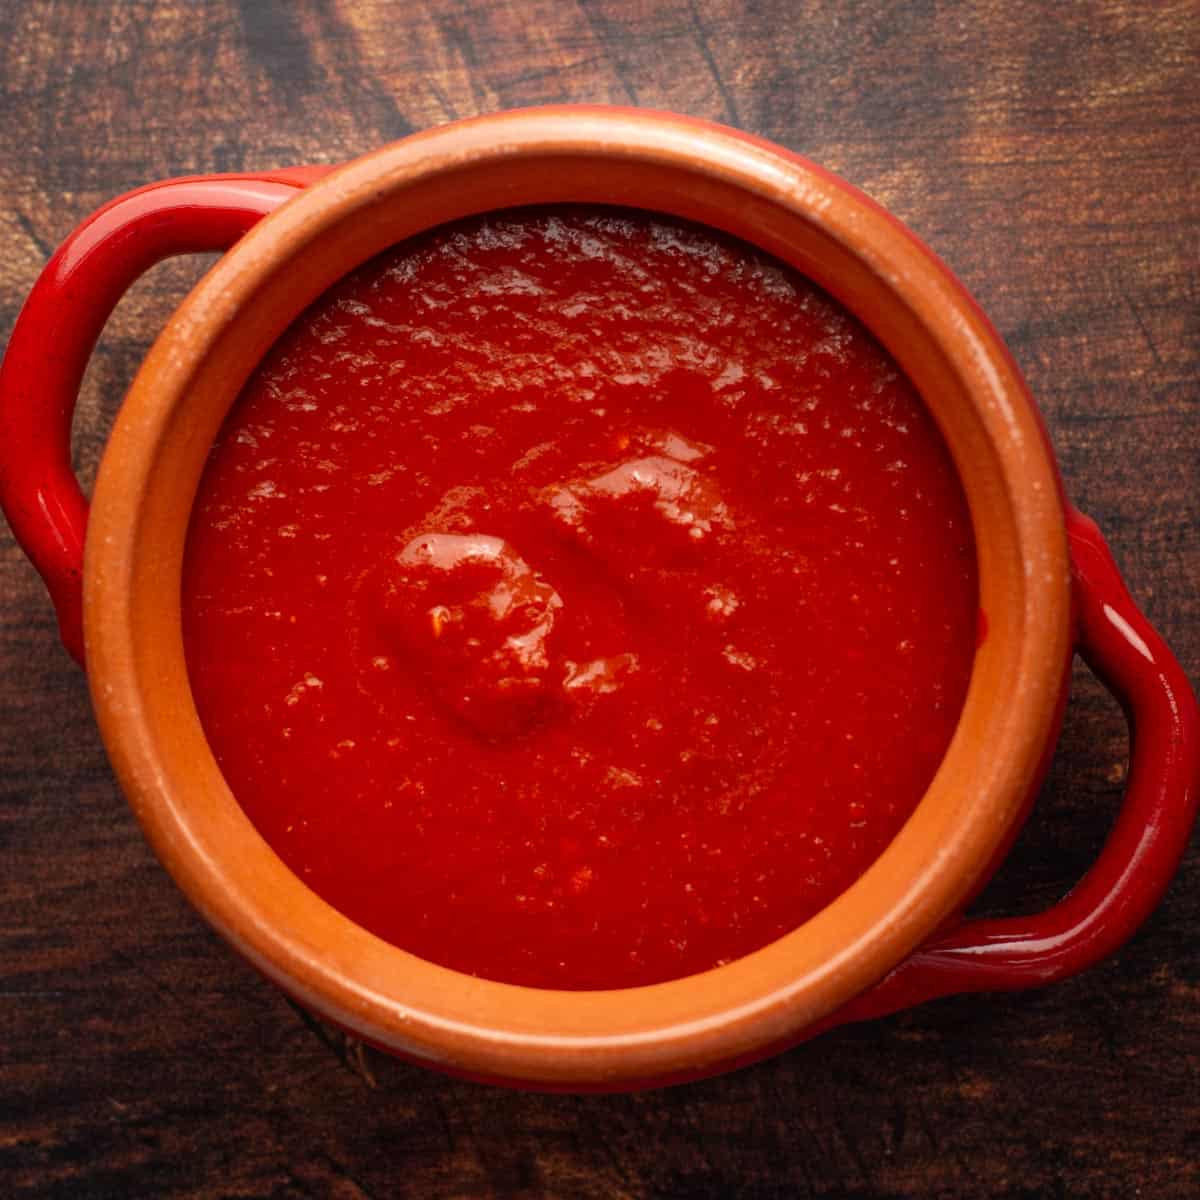 Basic Red Chile Sauce Recipe (Enchilada Sauce)